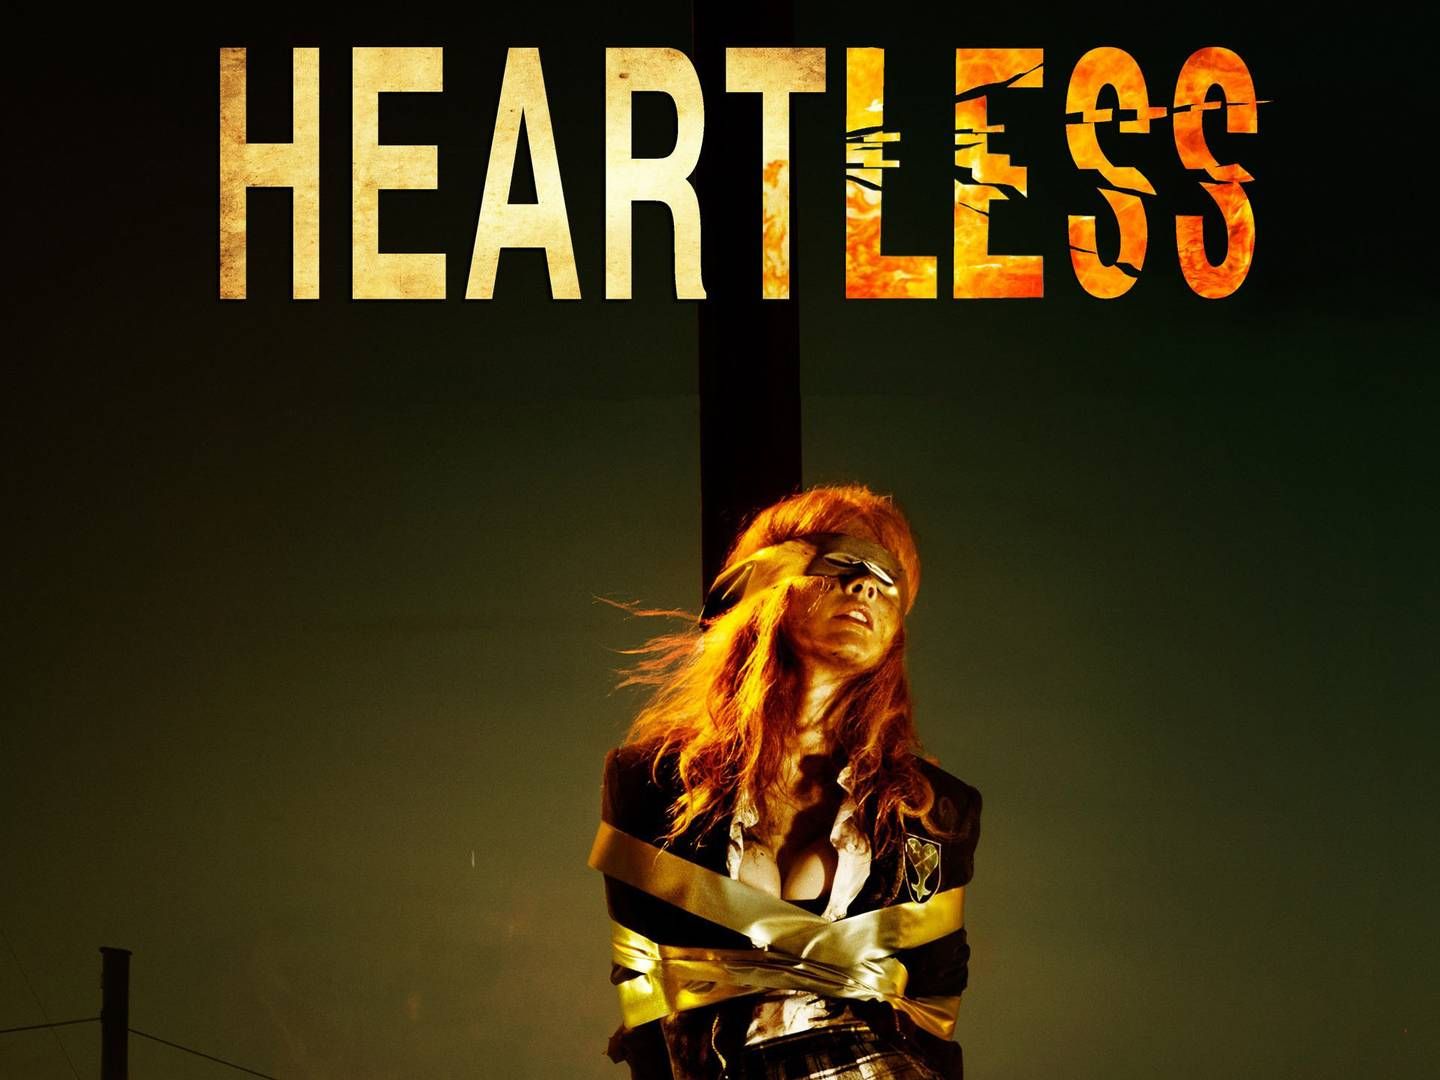 Discovery har tidligere satset på drama med serien "Heartless".